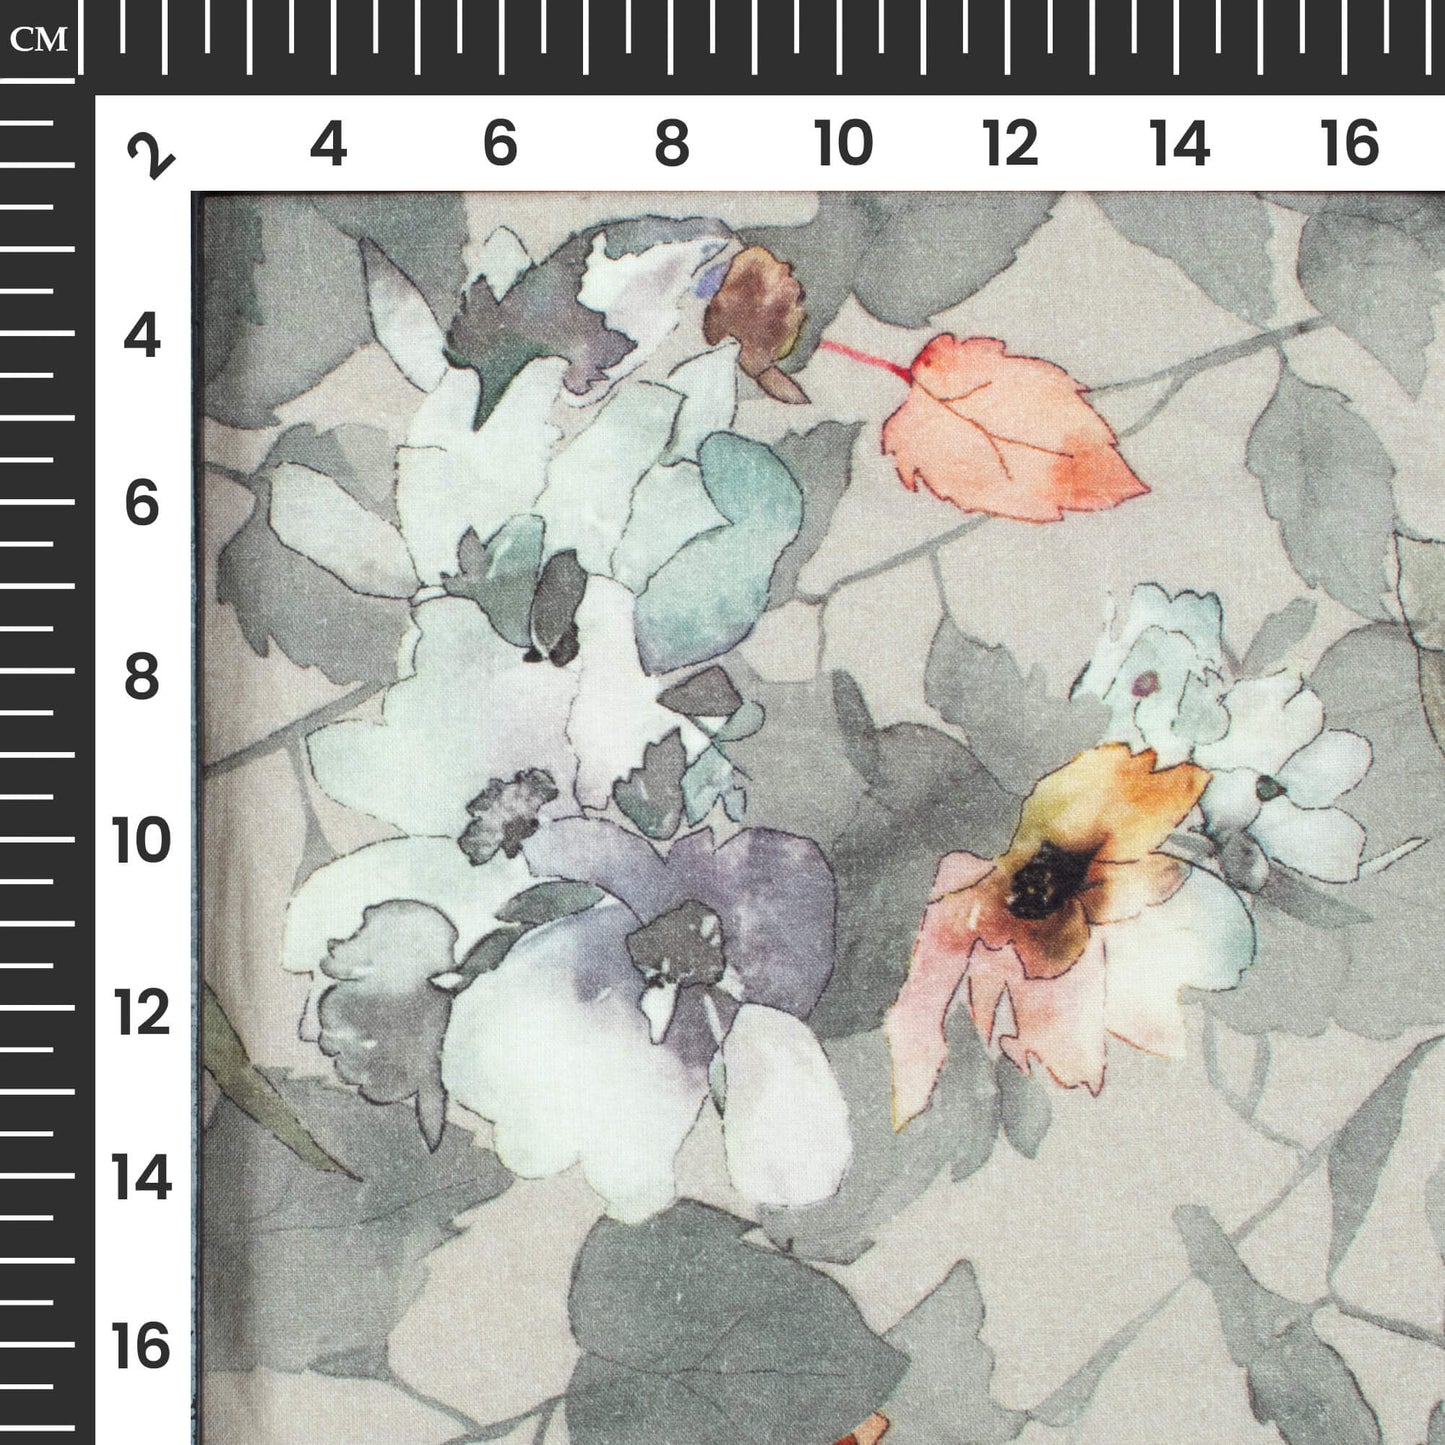 Rhino Grey And Peach Floral Digital Print Cotton Cambric Fabric